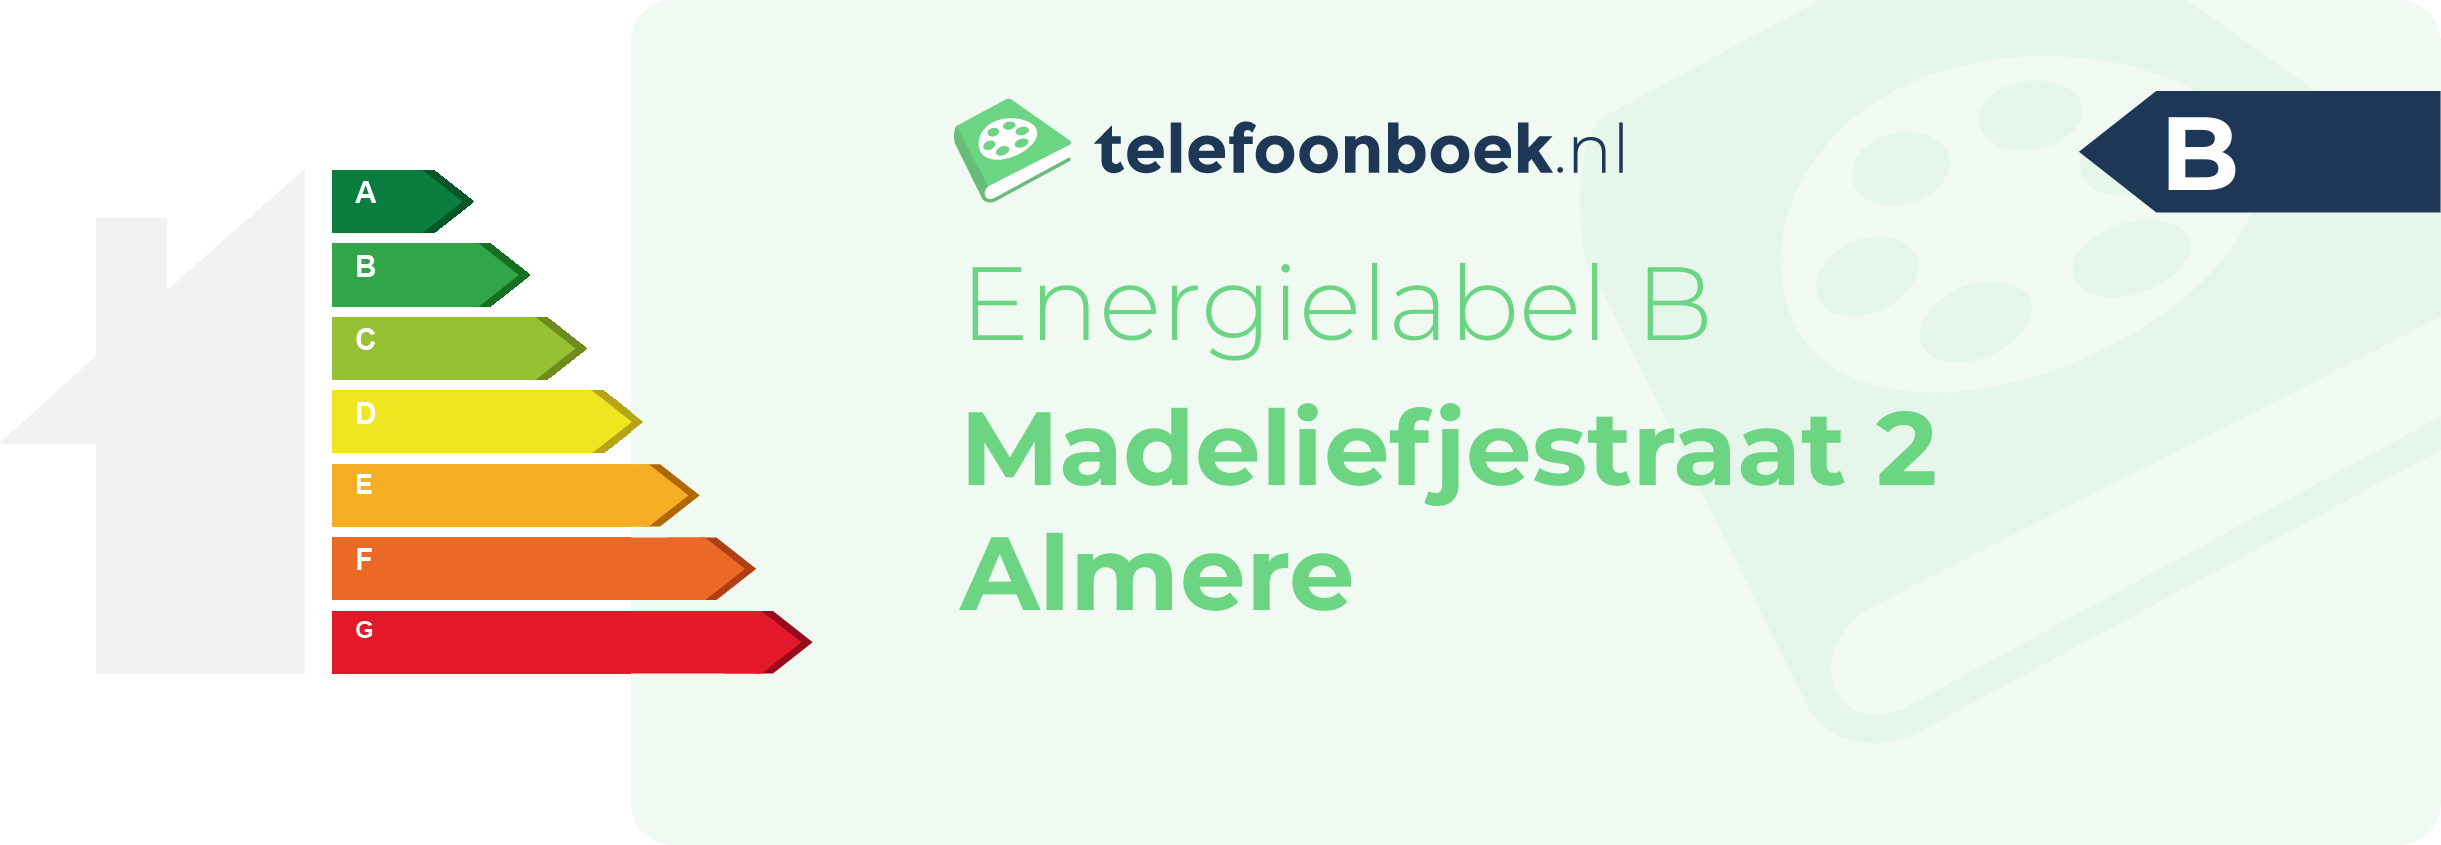 Energielabel Madeliefjestraat 2 Almere